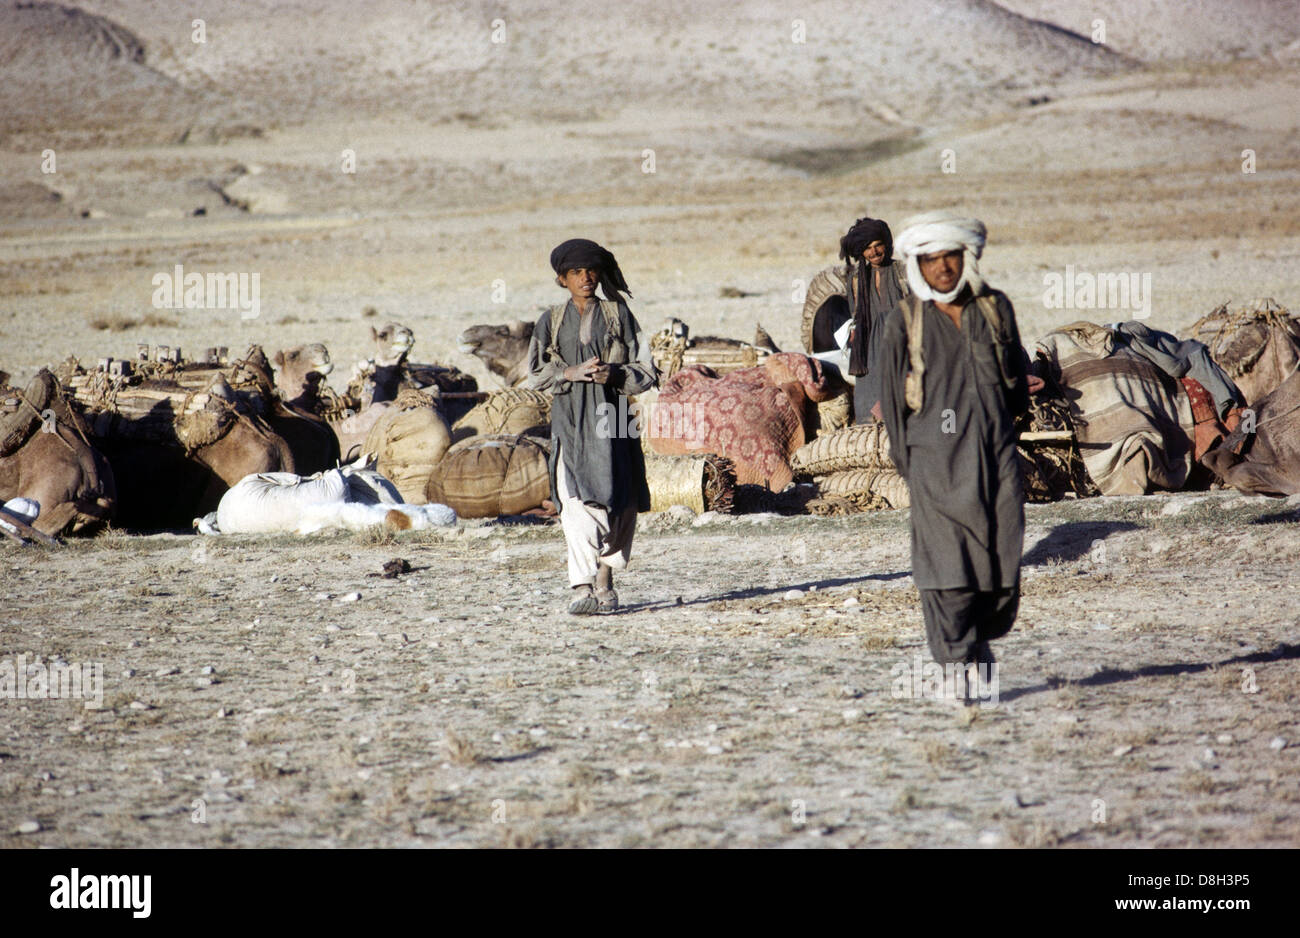 Les hommes nomades du désert en Afghanistan Banque D'Images